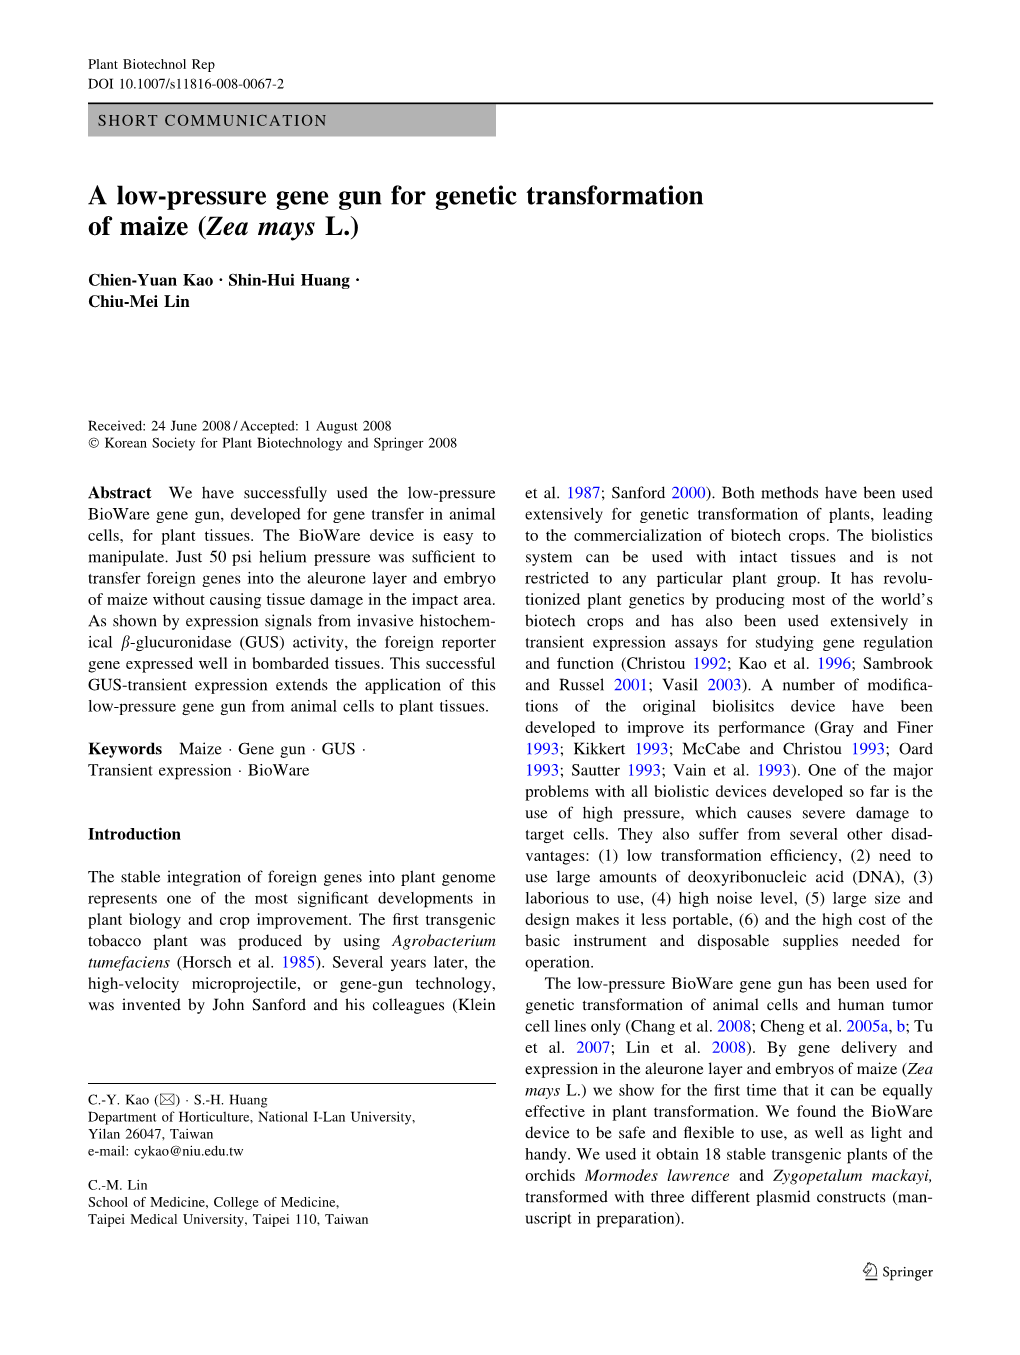 A Low-Pressure Gene Gun for Genetic Transformation of Maize (Zea Mays L.)